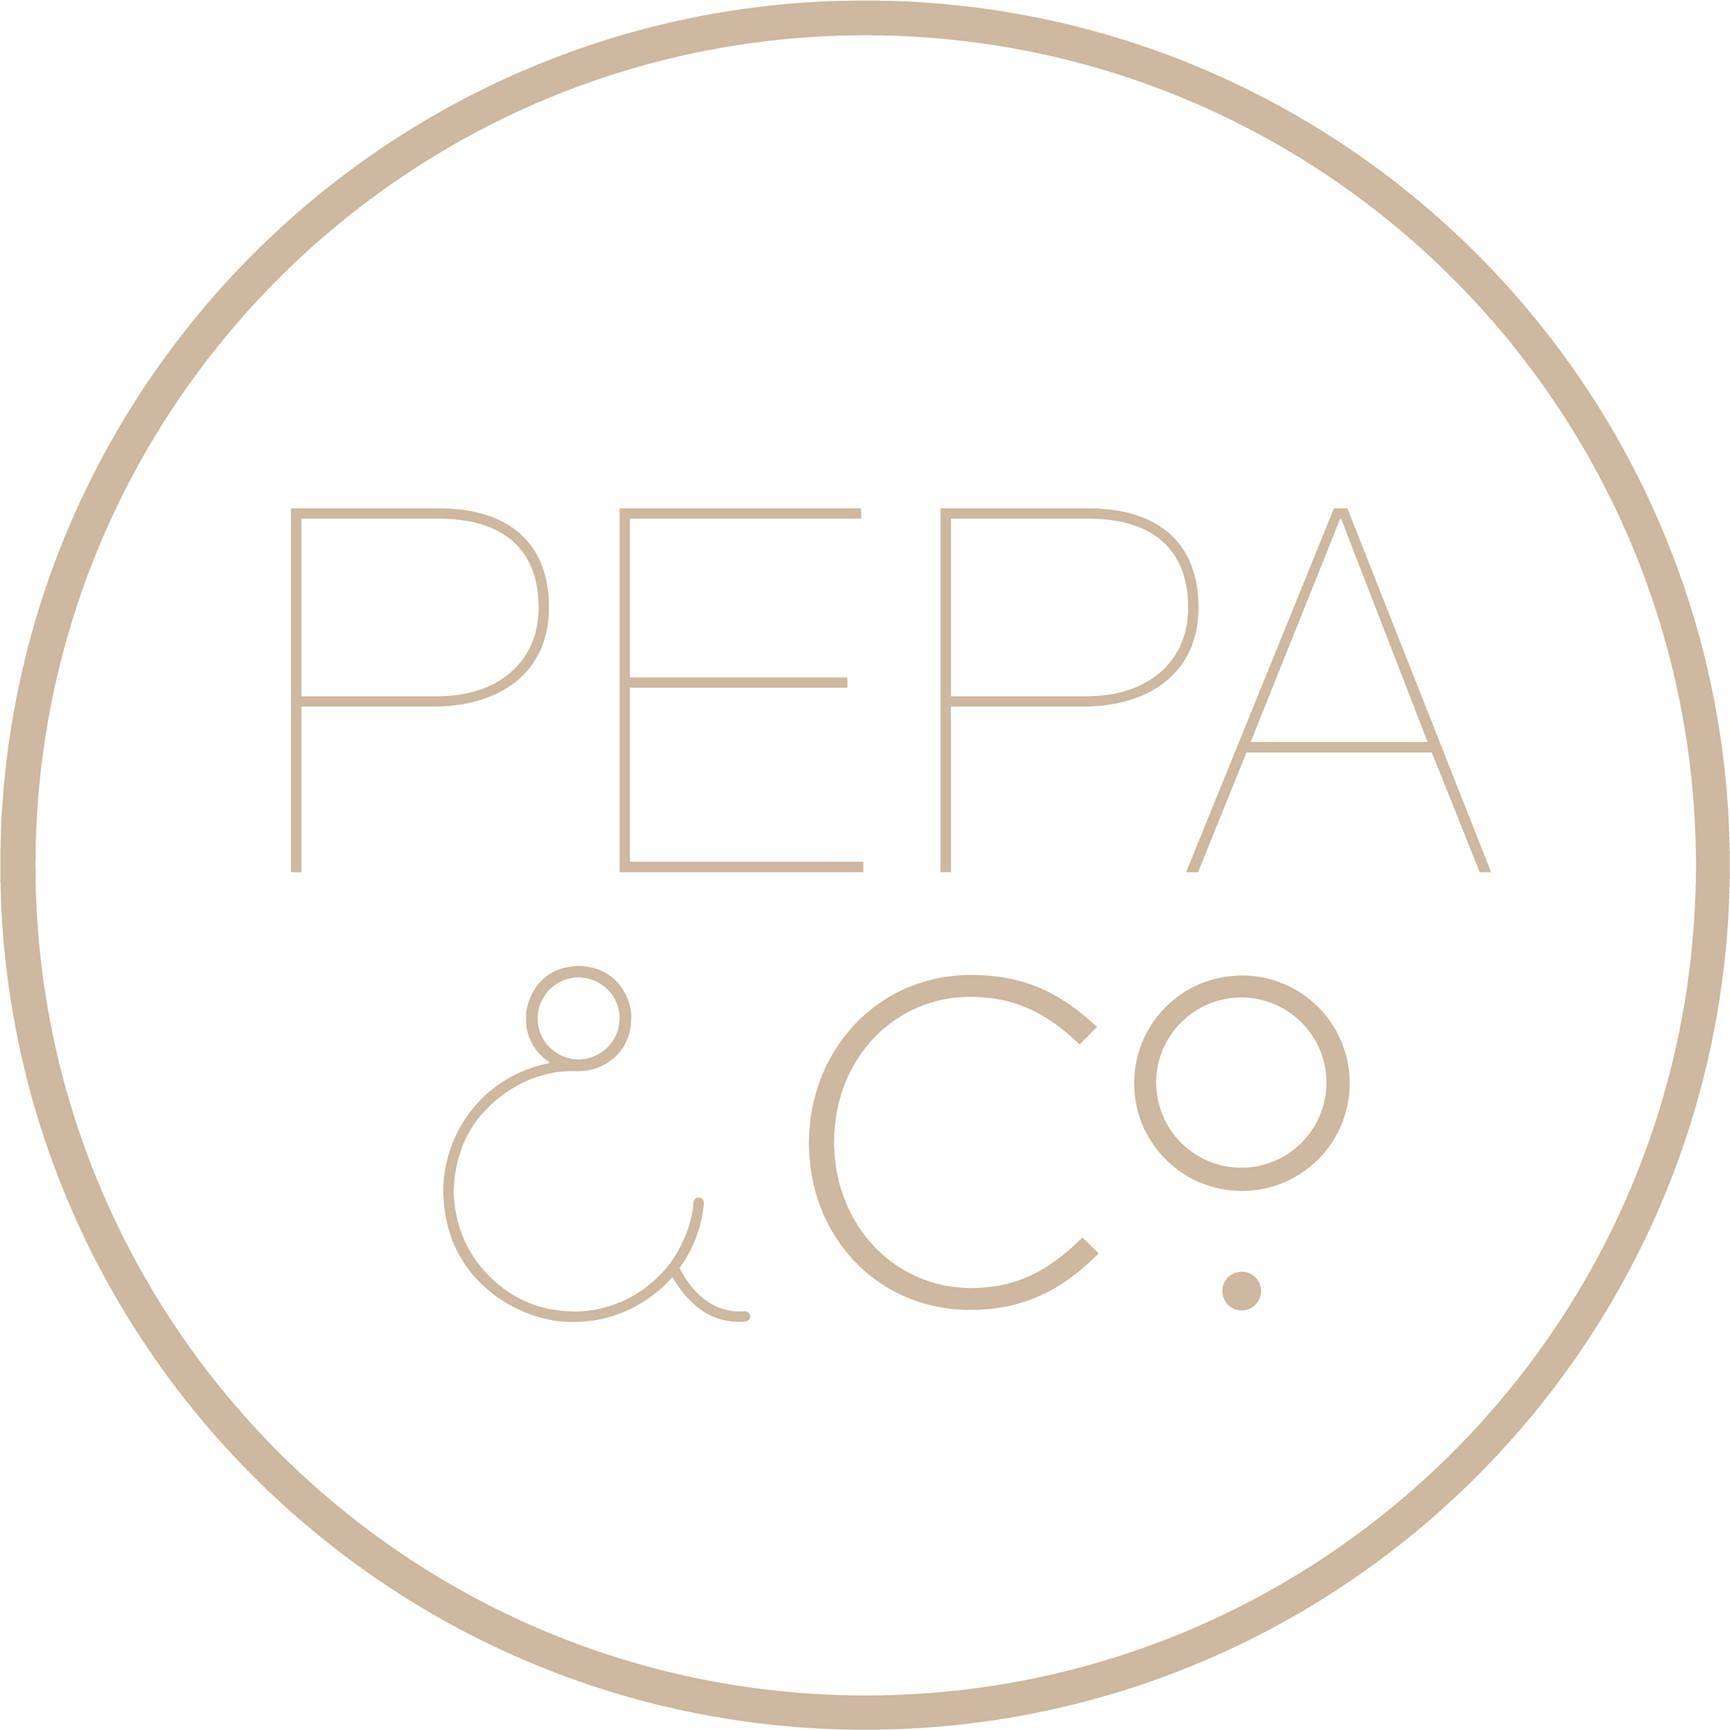 Pepa & Co - Crunchbase Company Profile & Funding